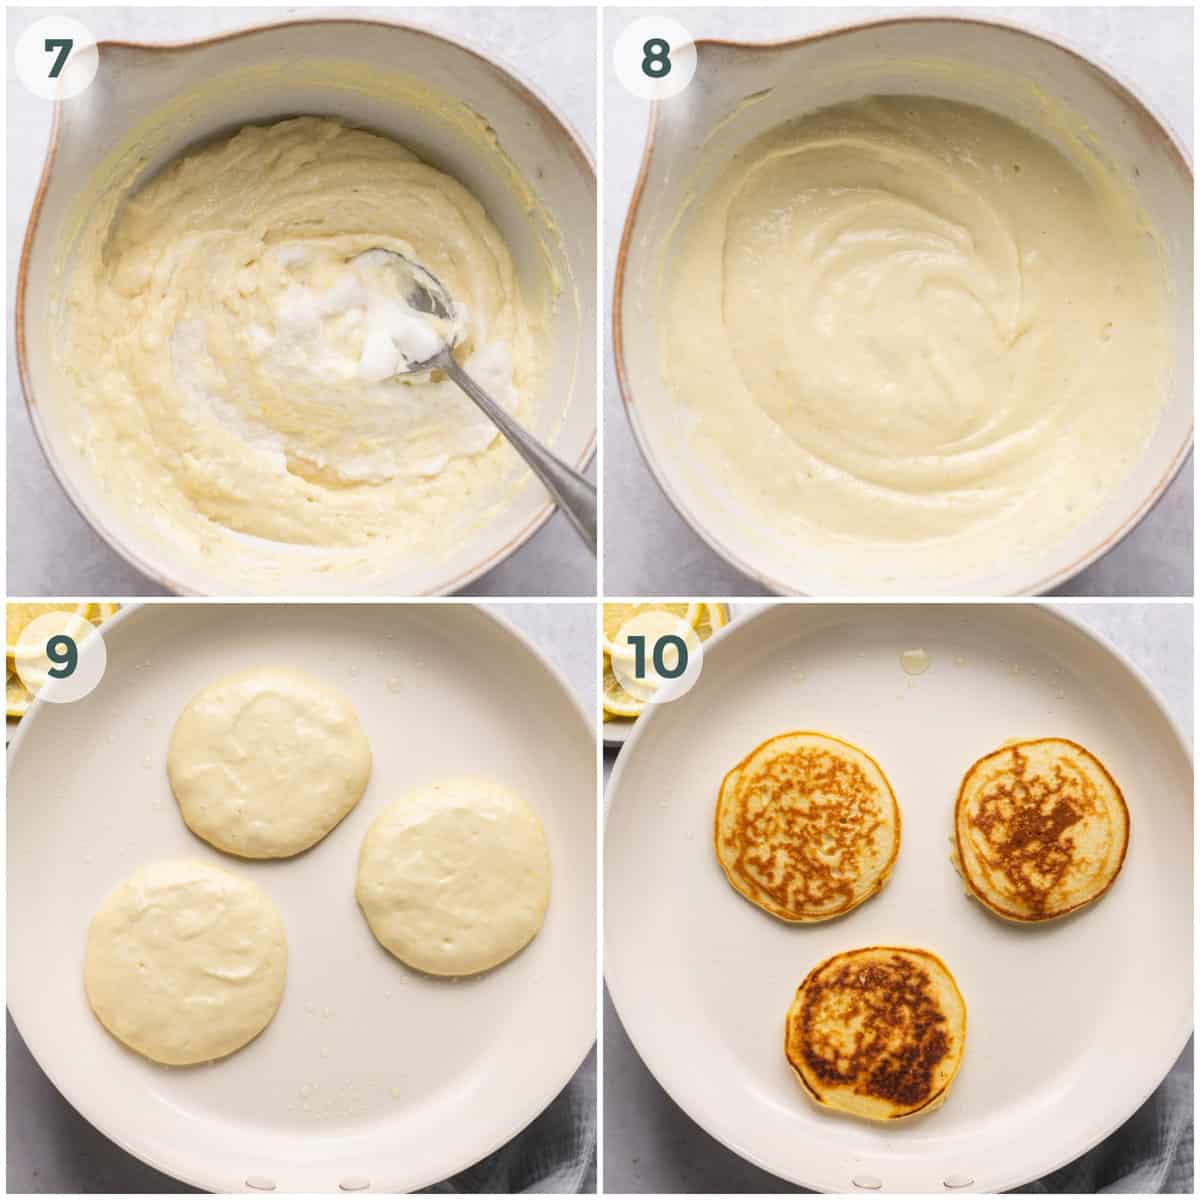 steps 7-10 of preparing lemon ricotta pancakes recipe